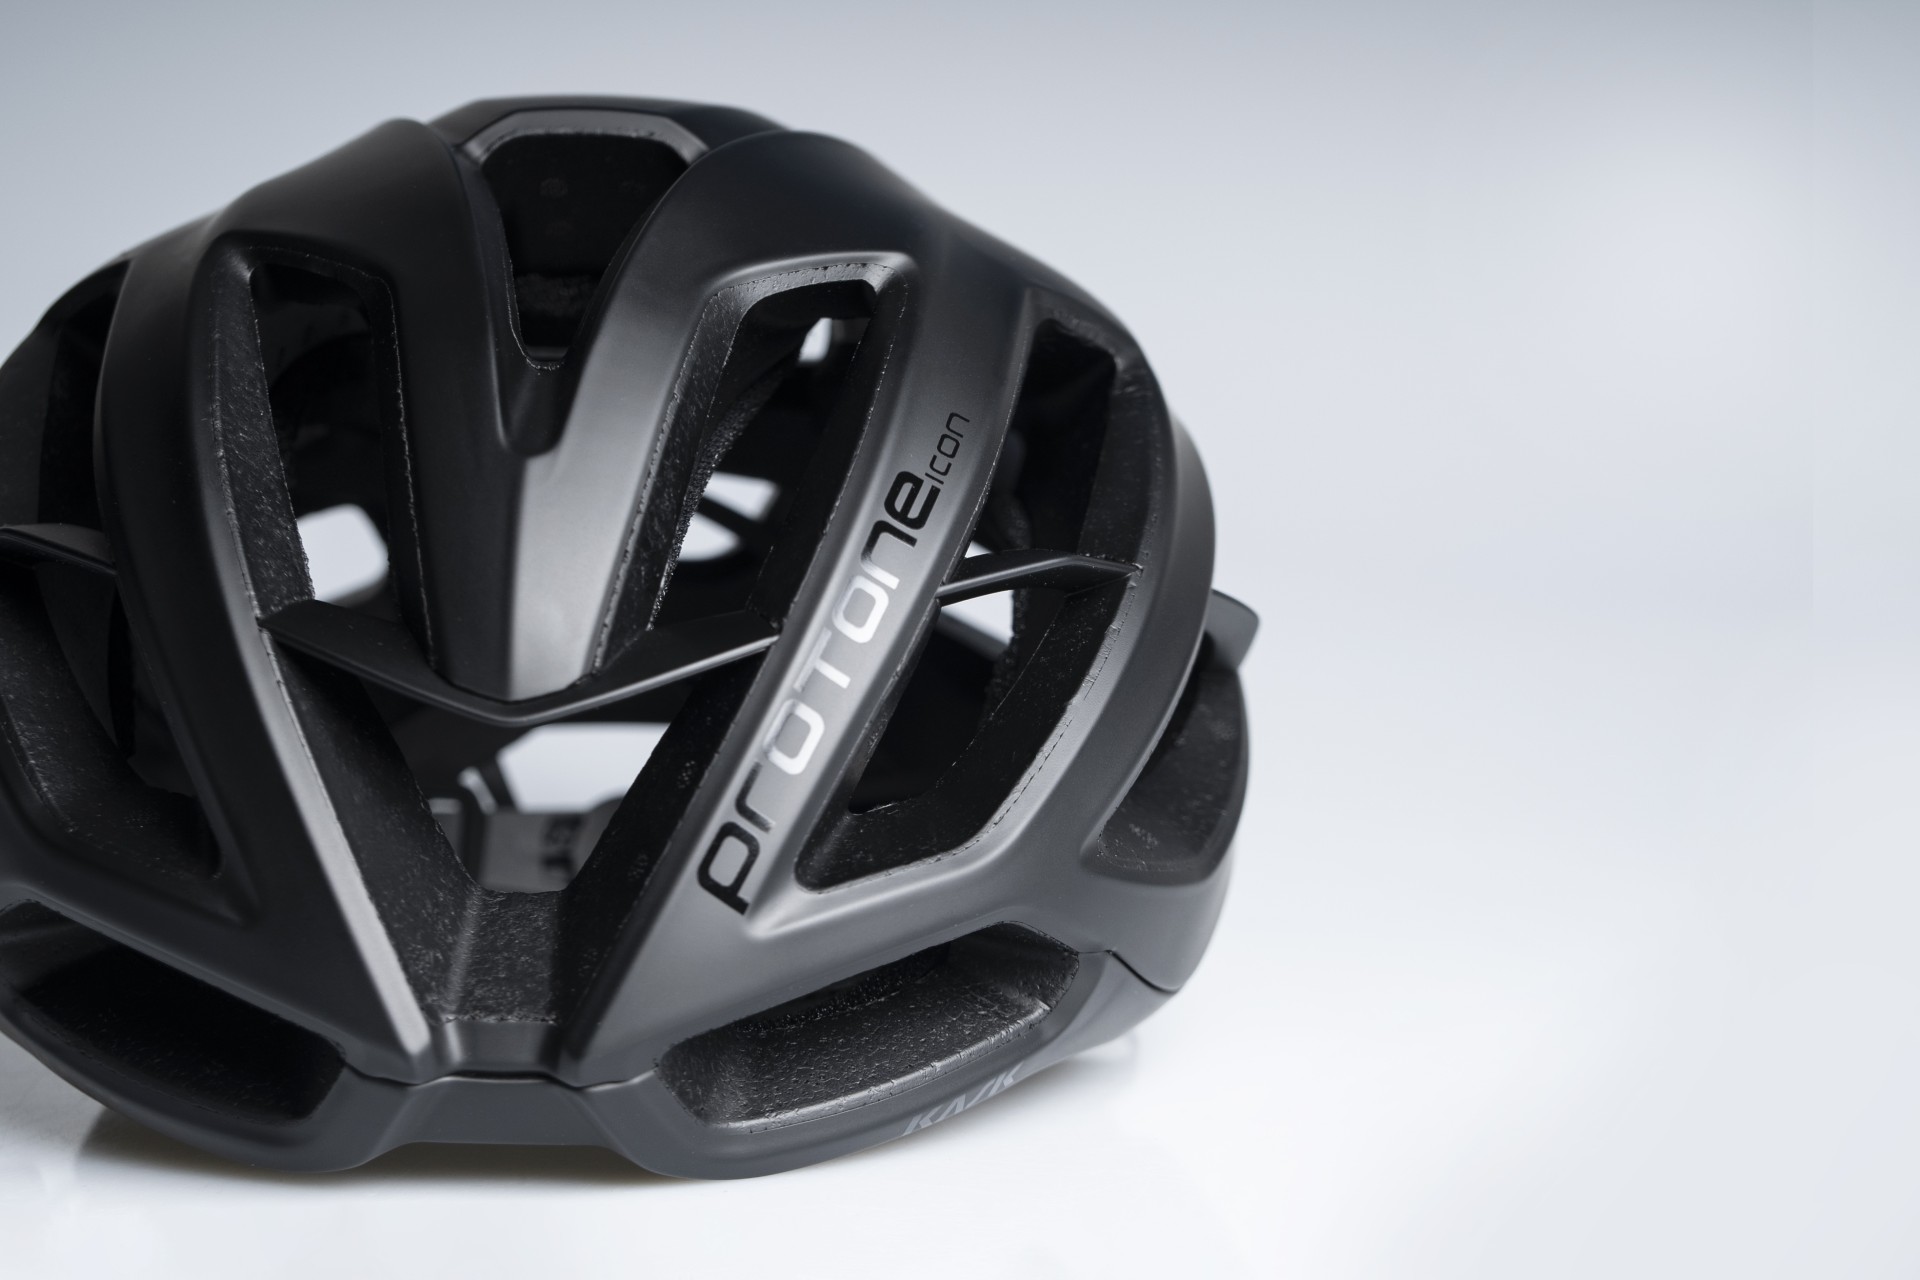 Review: KASK Protone Helmet